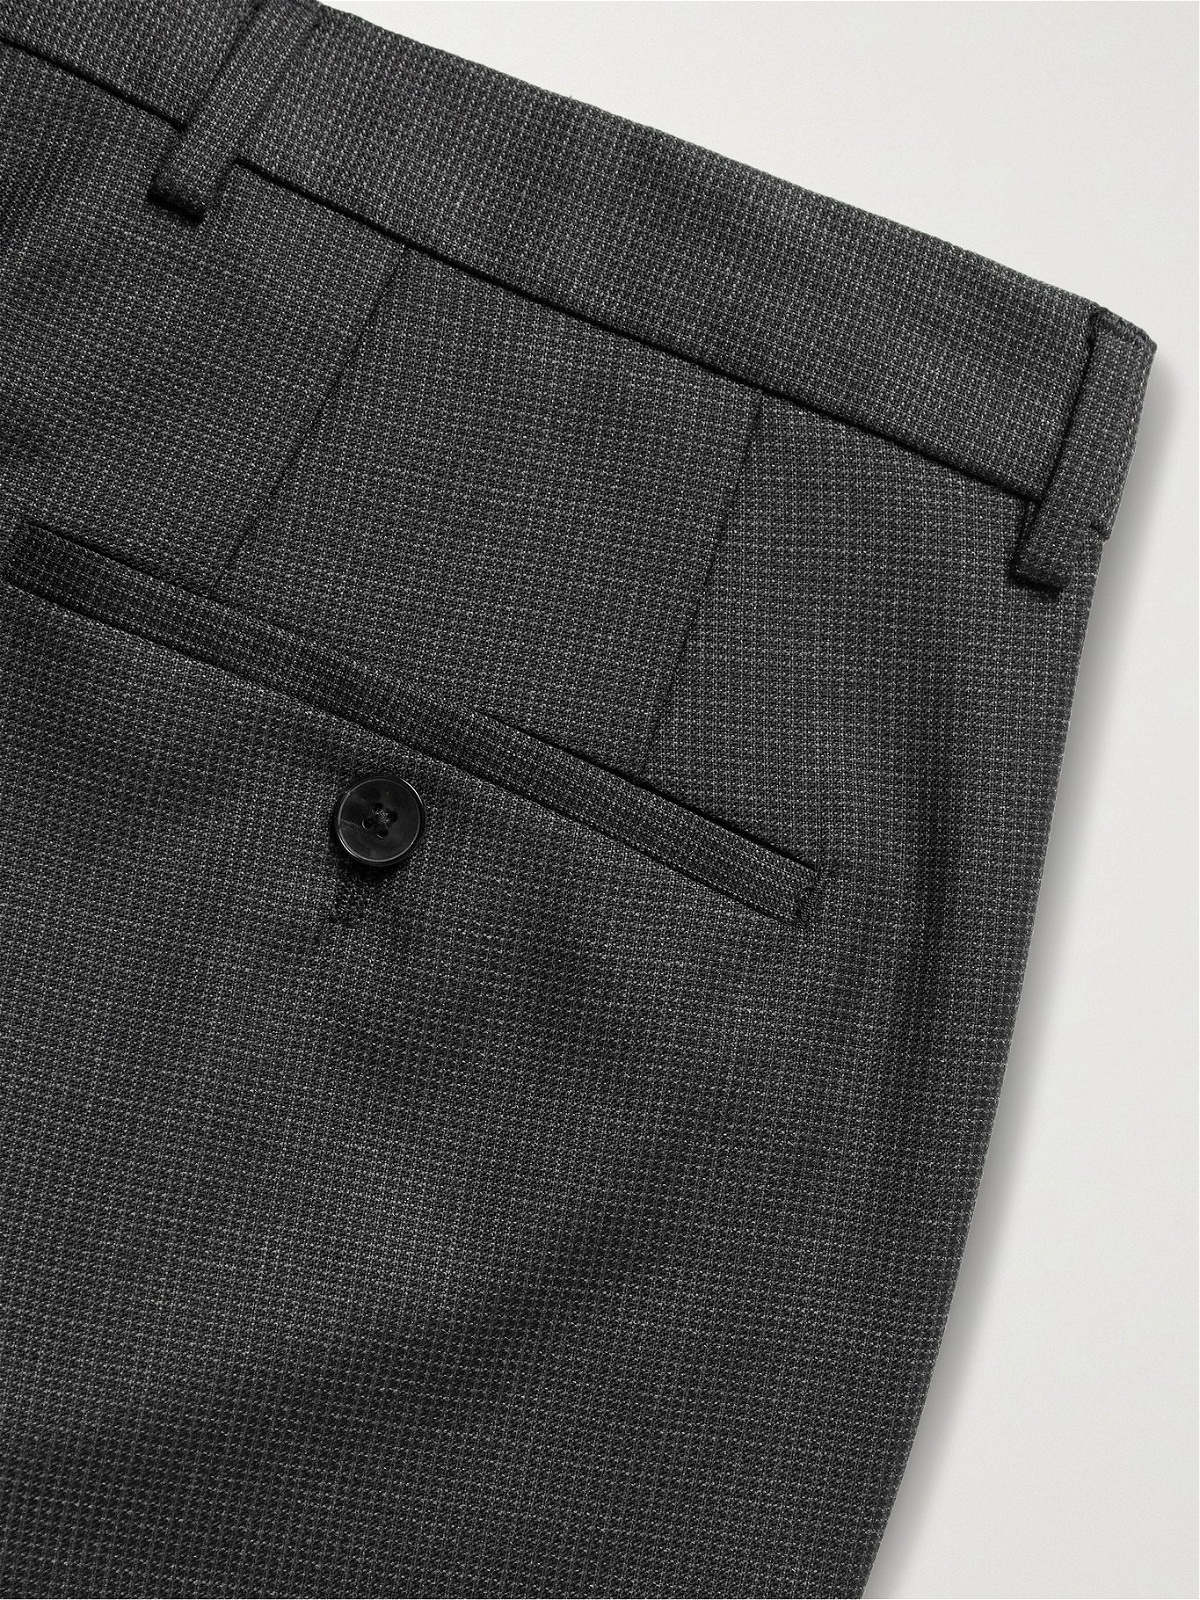 $278 HUGO BOSS Tamea Stretch Virgin Wool Trousers Dress Pants - Size 4 /26  - NWT | eBay